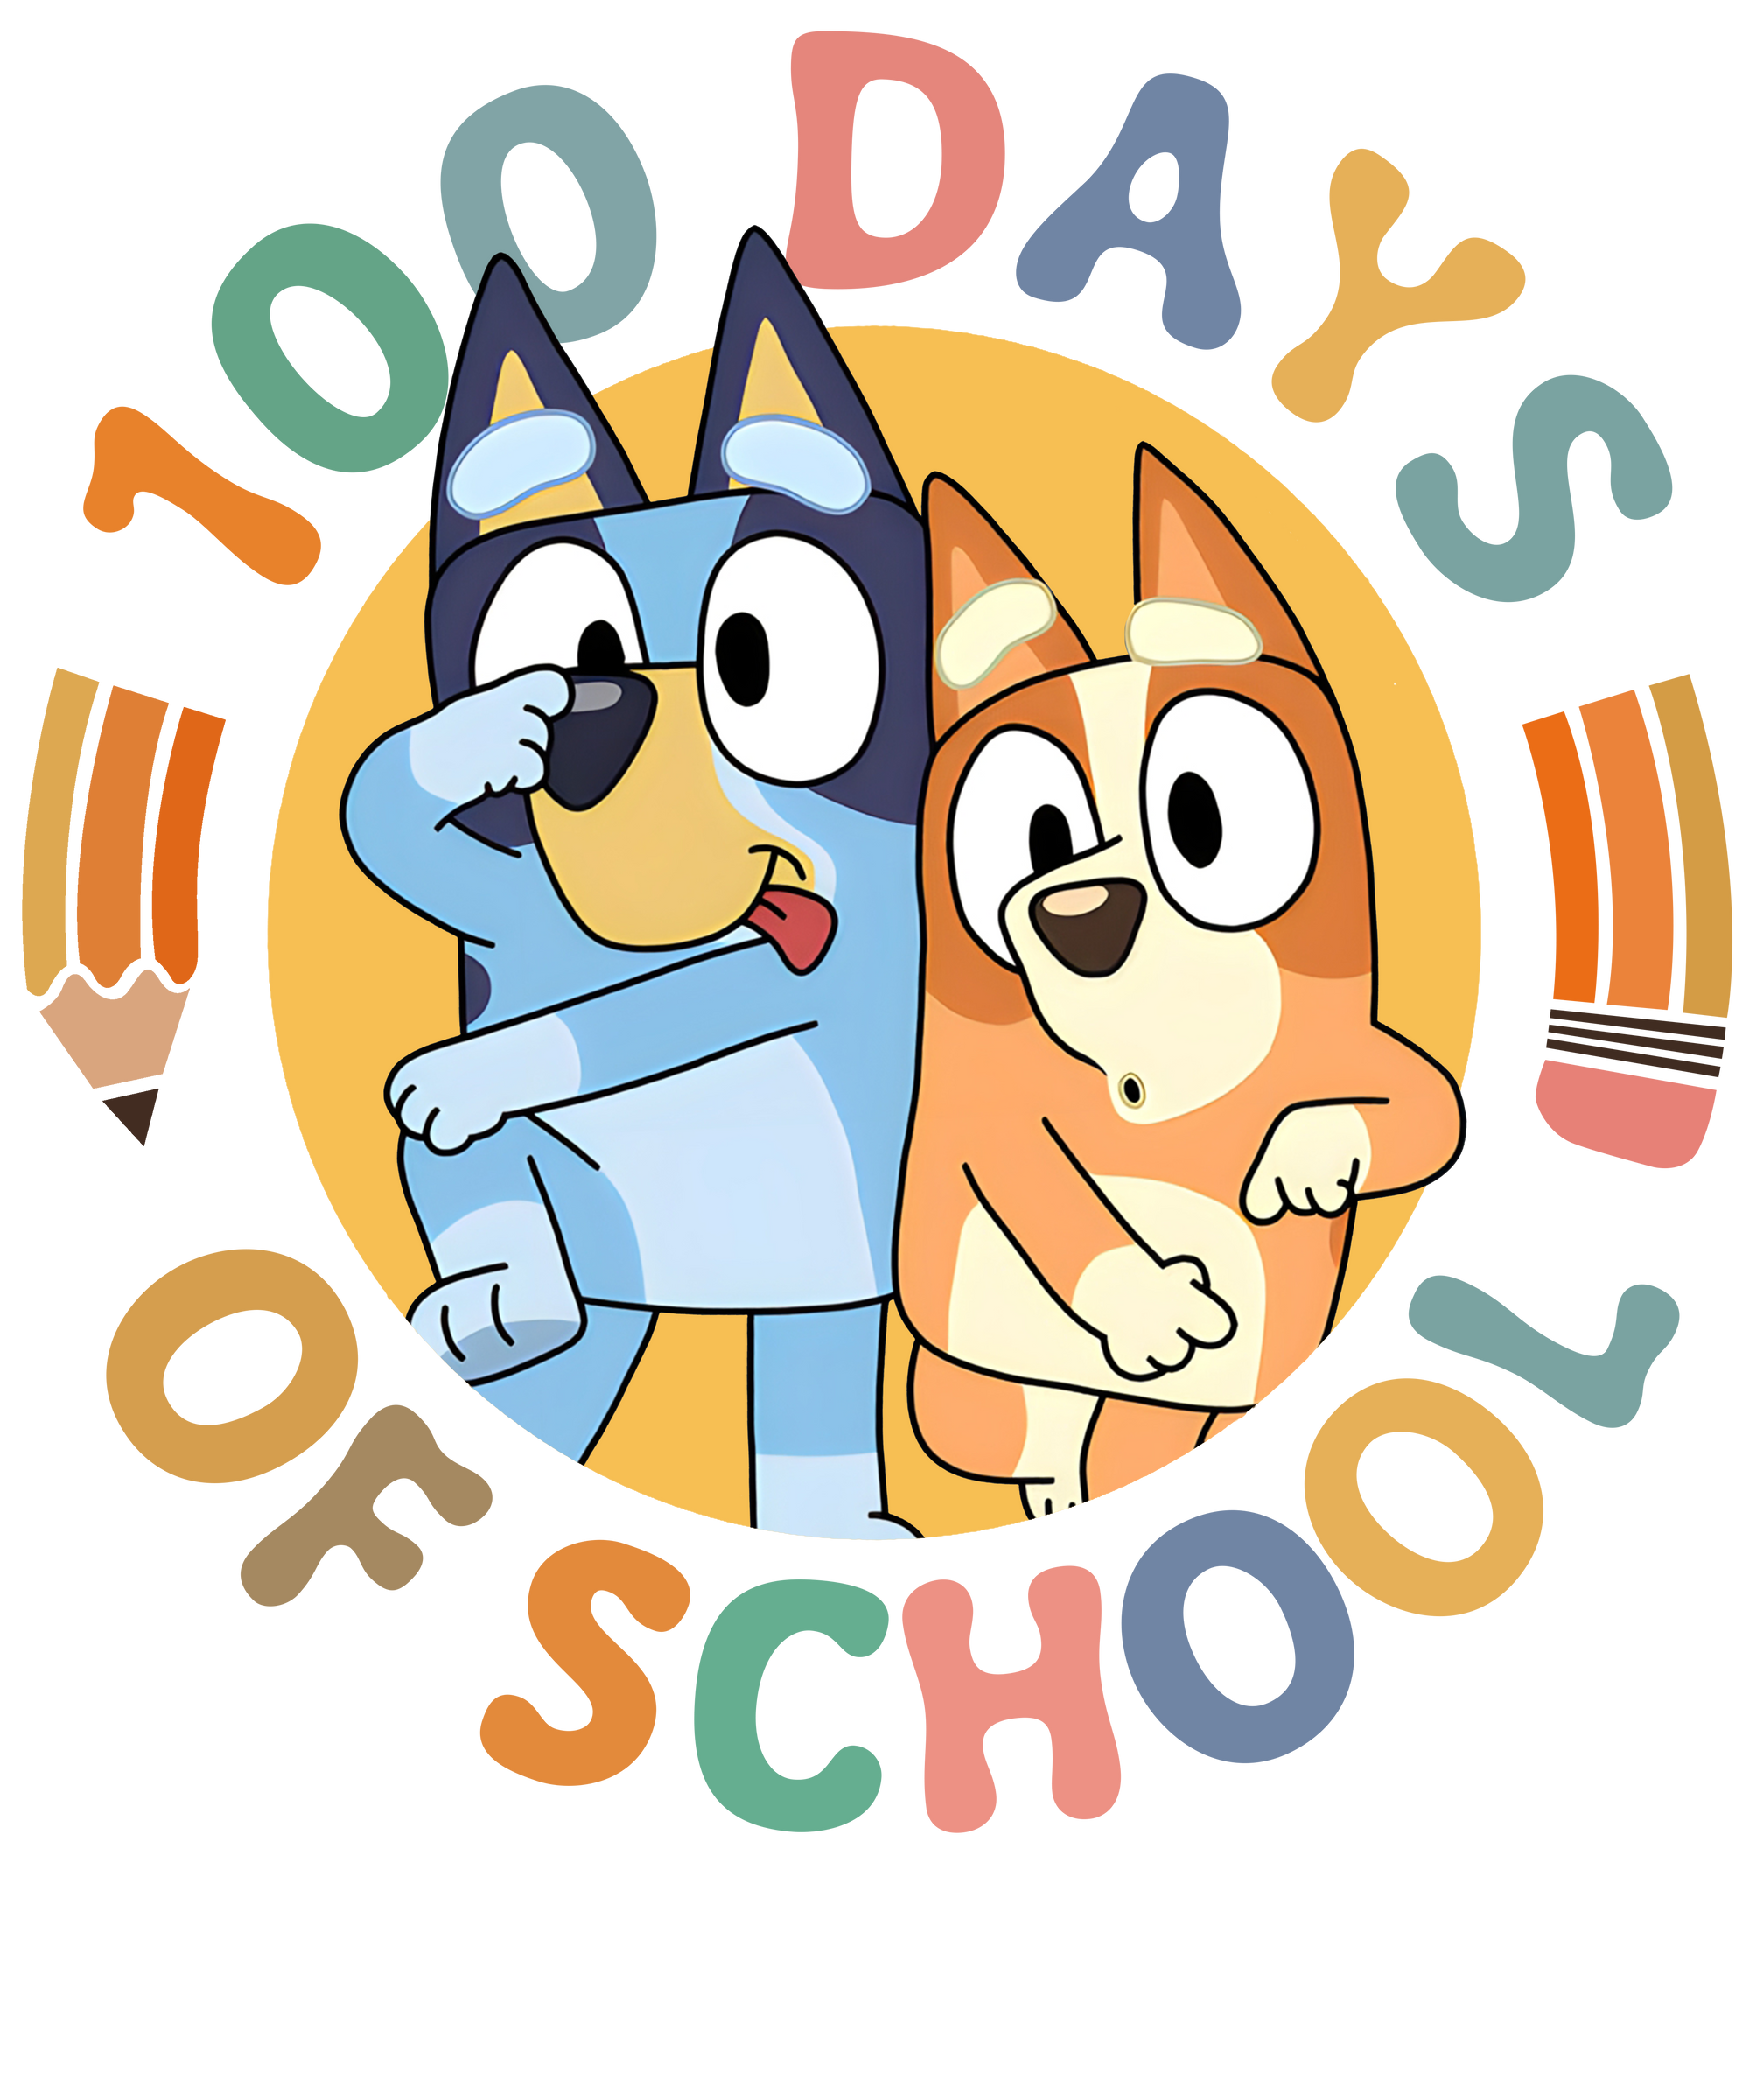 100 DAYS OF SCHOOL